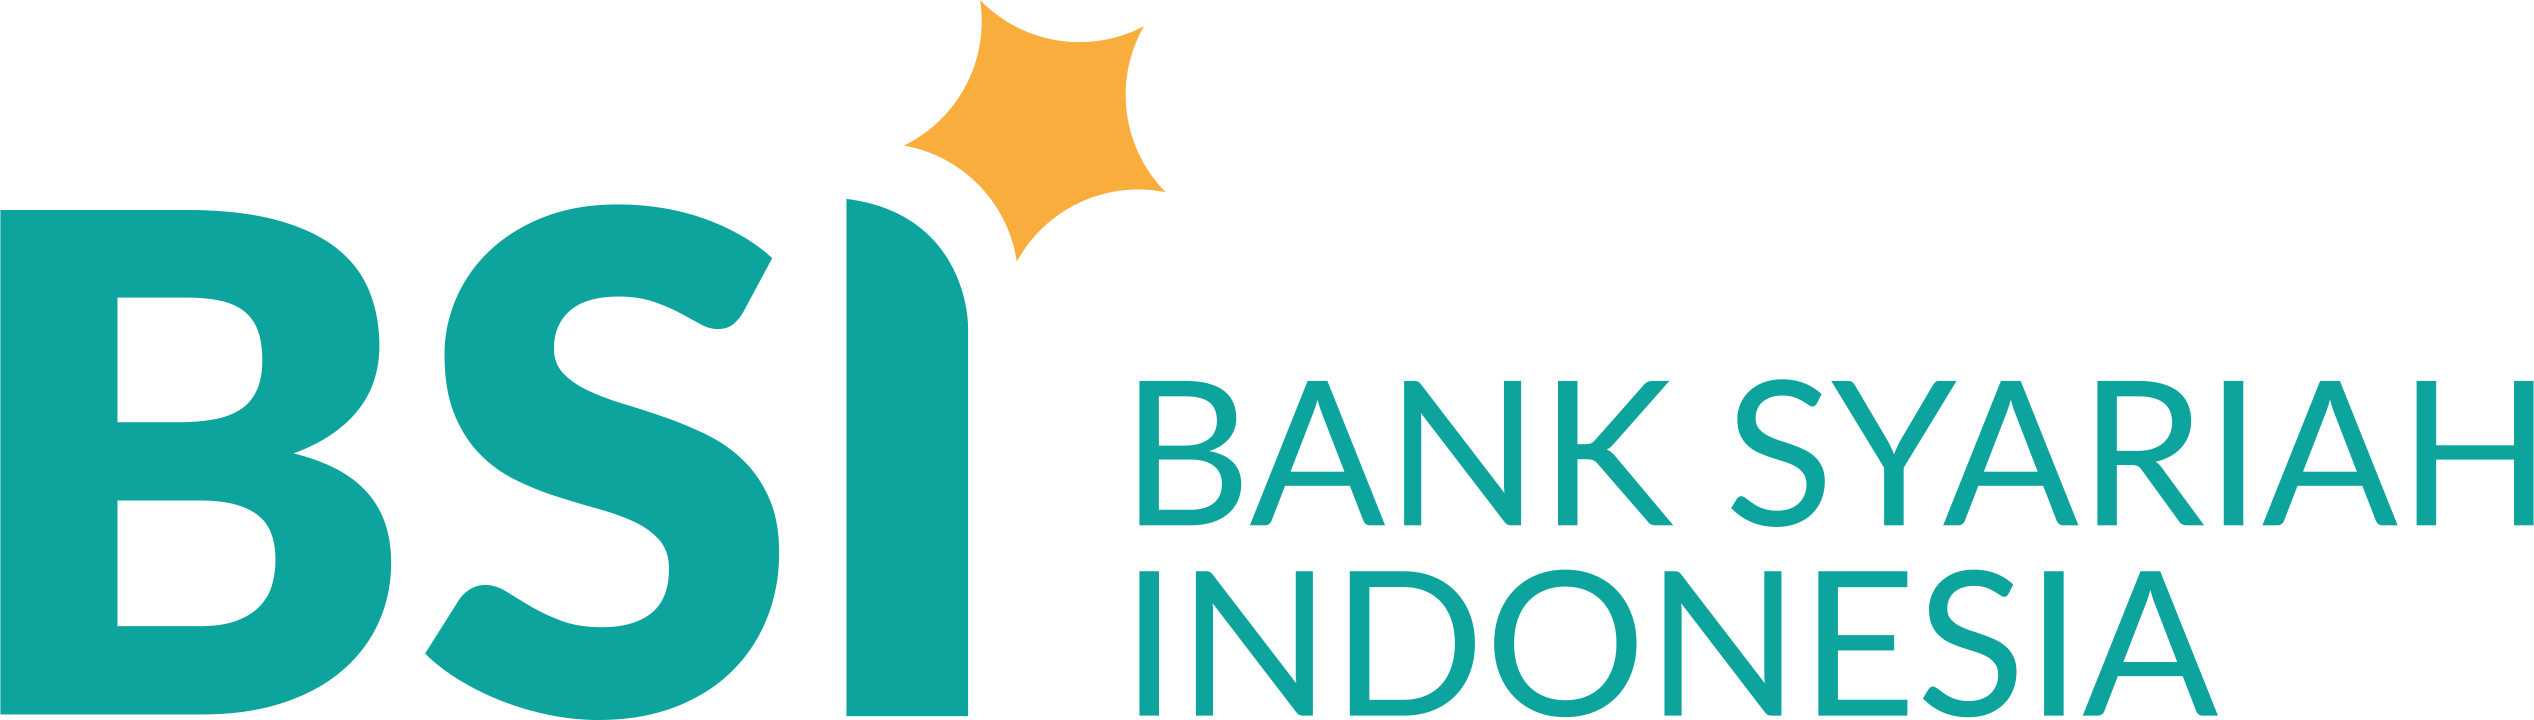 BSI-Bank-Syariah-Indonesia-Logo-PNG720p-Vector69Com.png